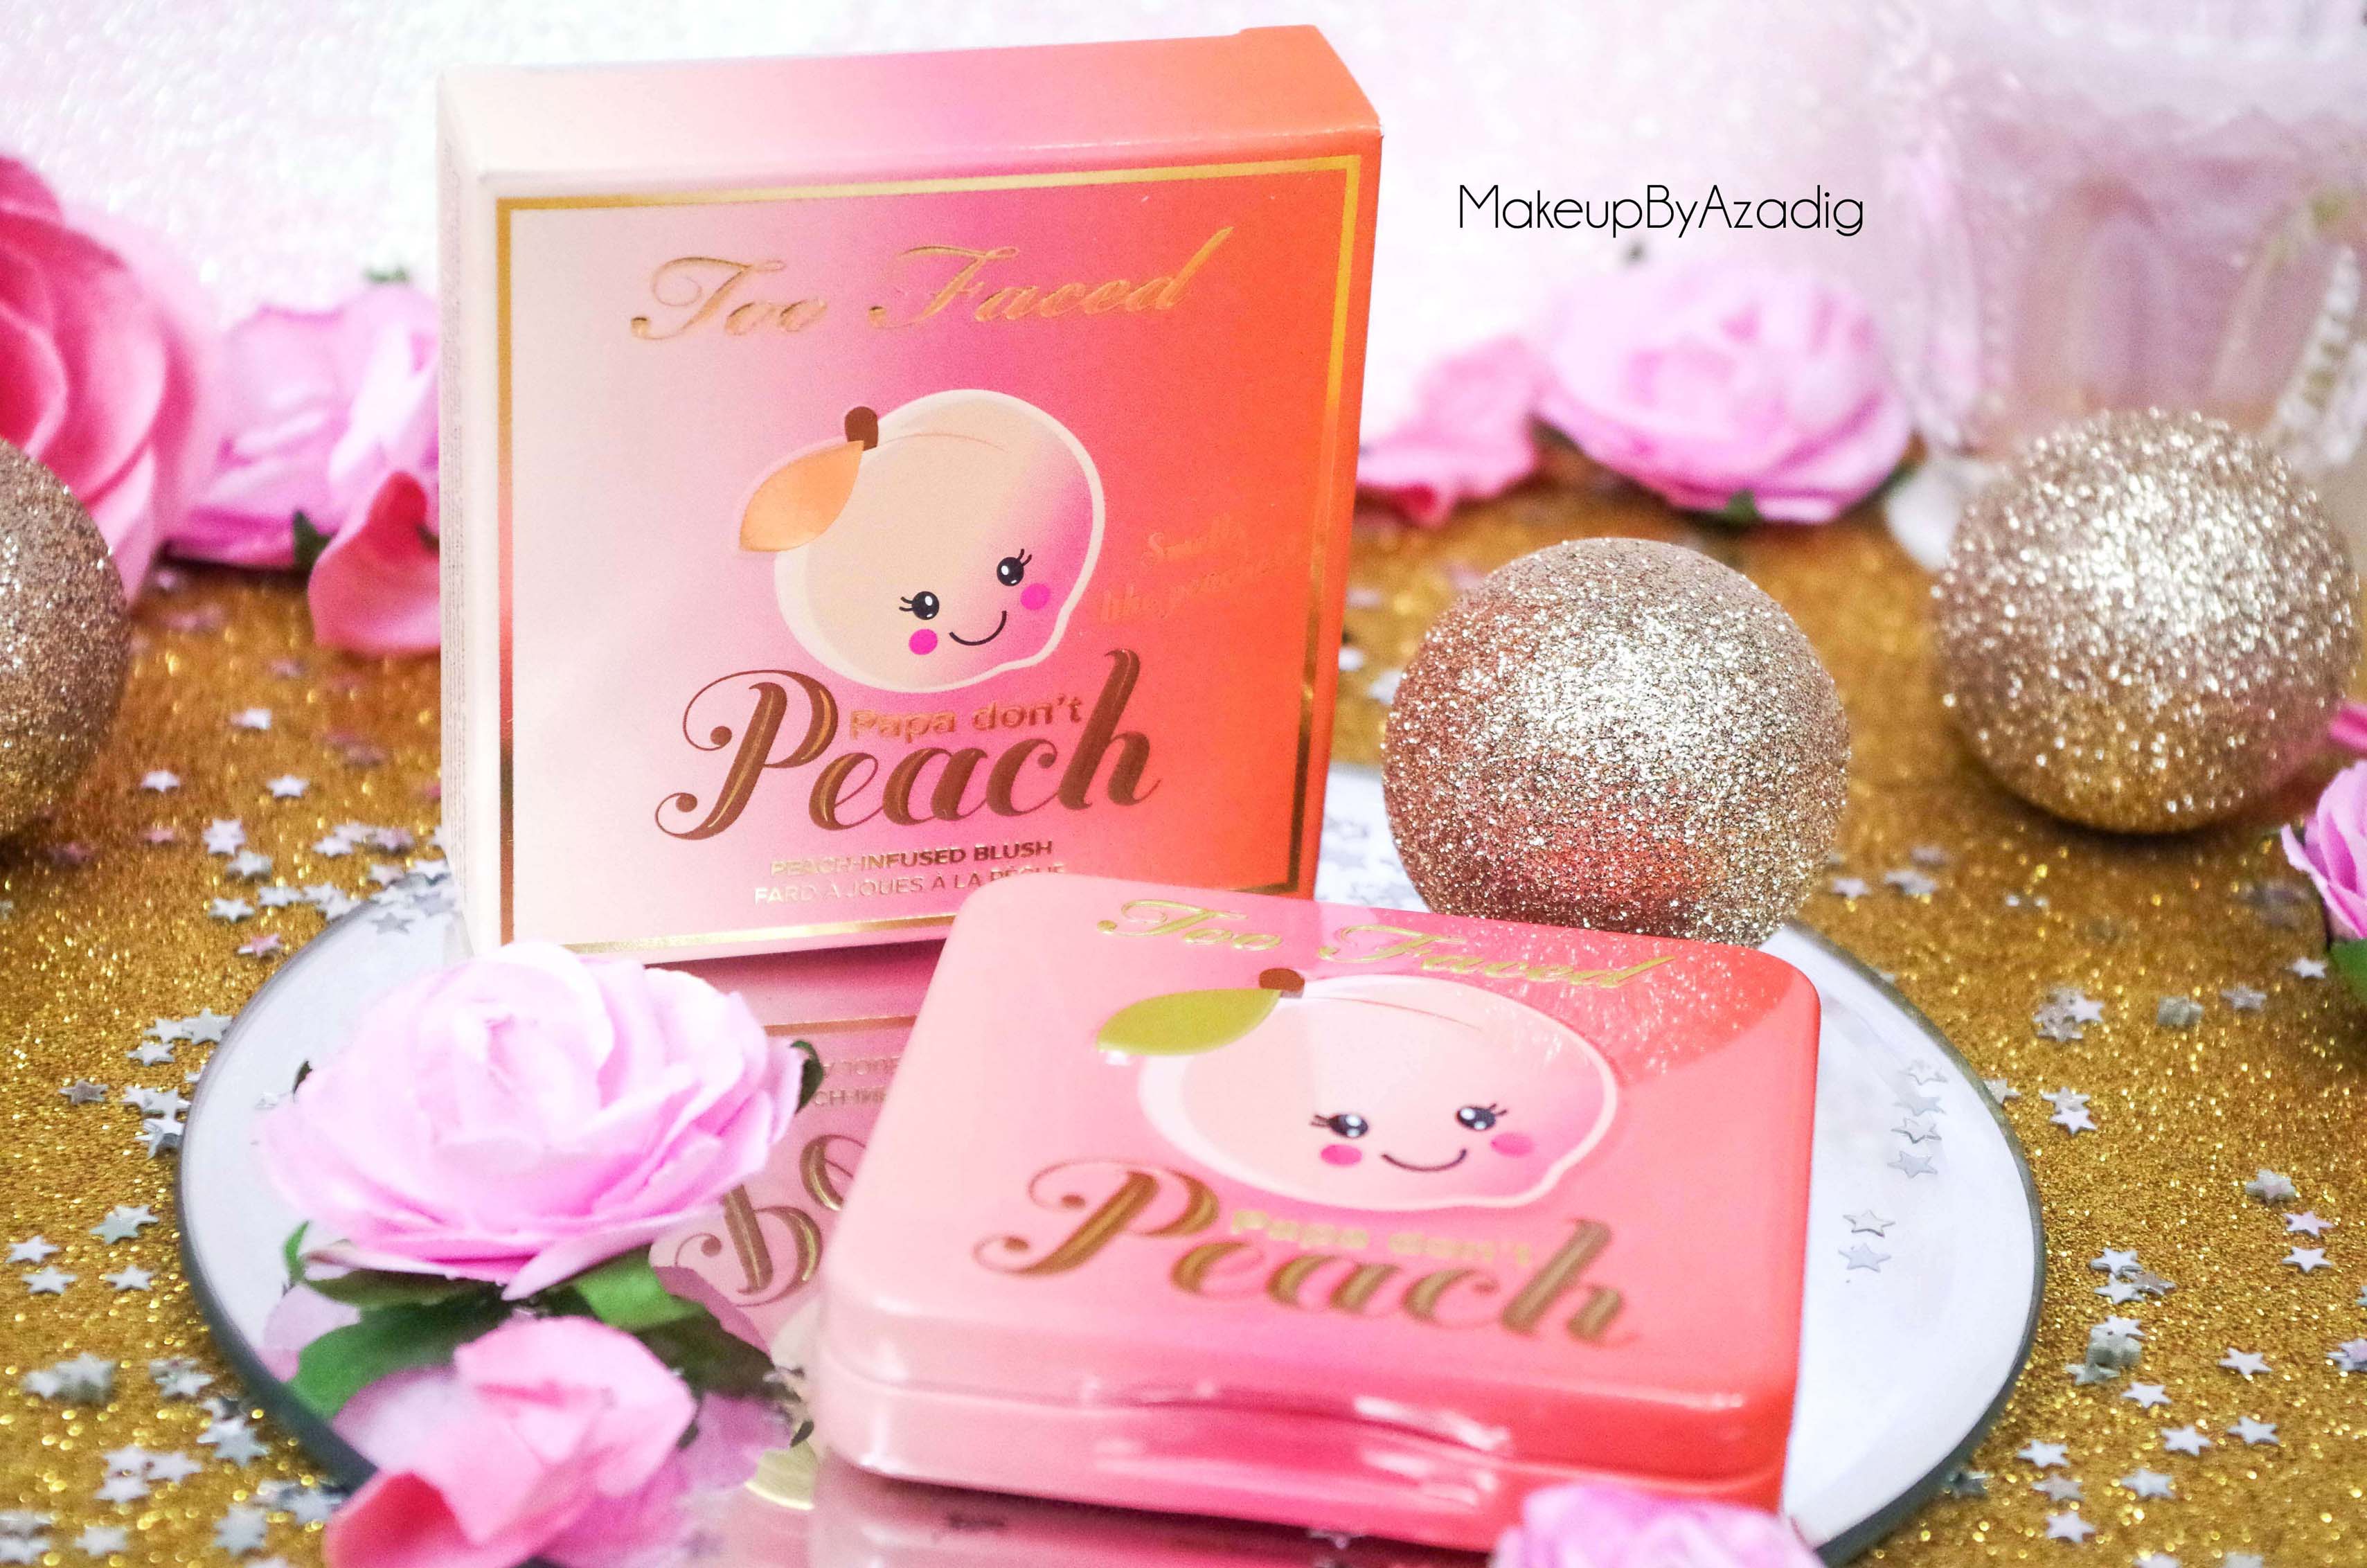 review-miniature-nouveau-blush-papa-dont-peach-too-faced-sephora-ete-printemps-paris-sweet-peach-swatch-avis-makeupbyazadig-usa-2